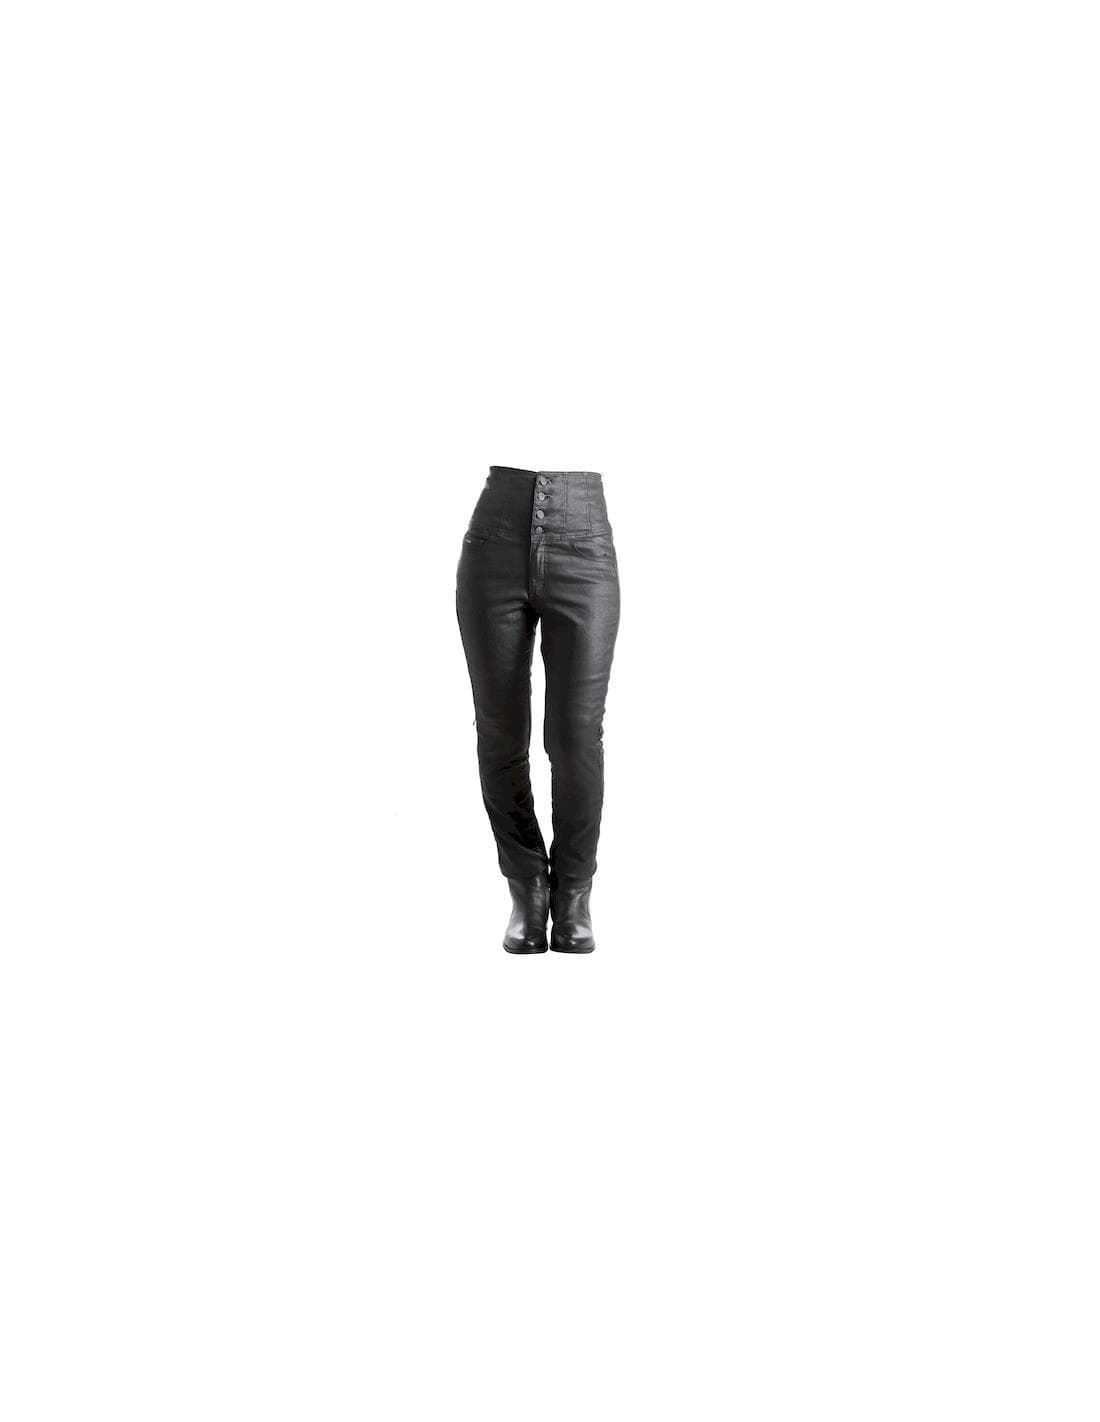 Jeans Overlap Evy Night chica - Imagen 1